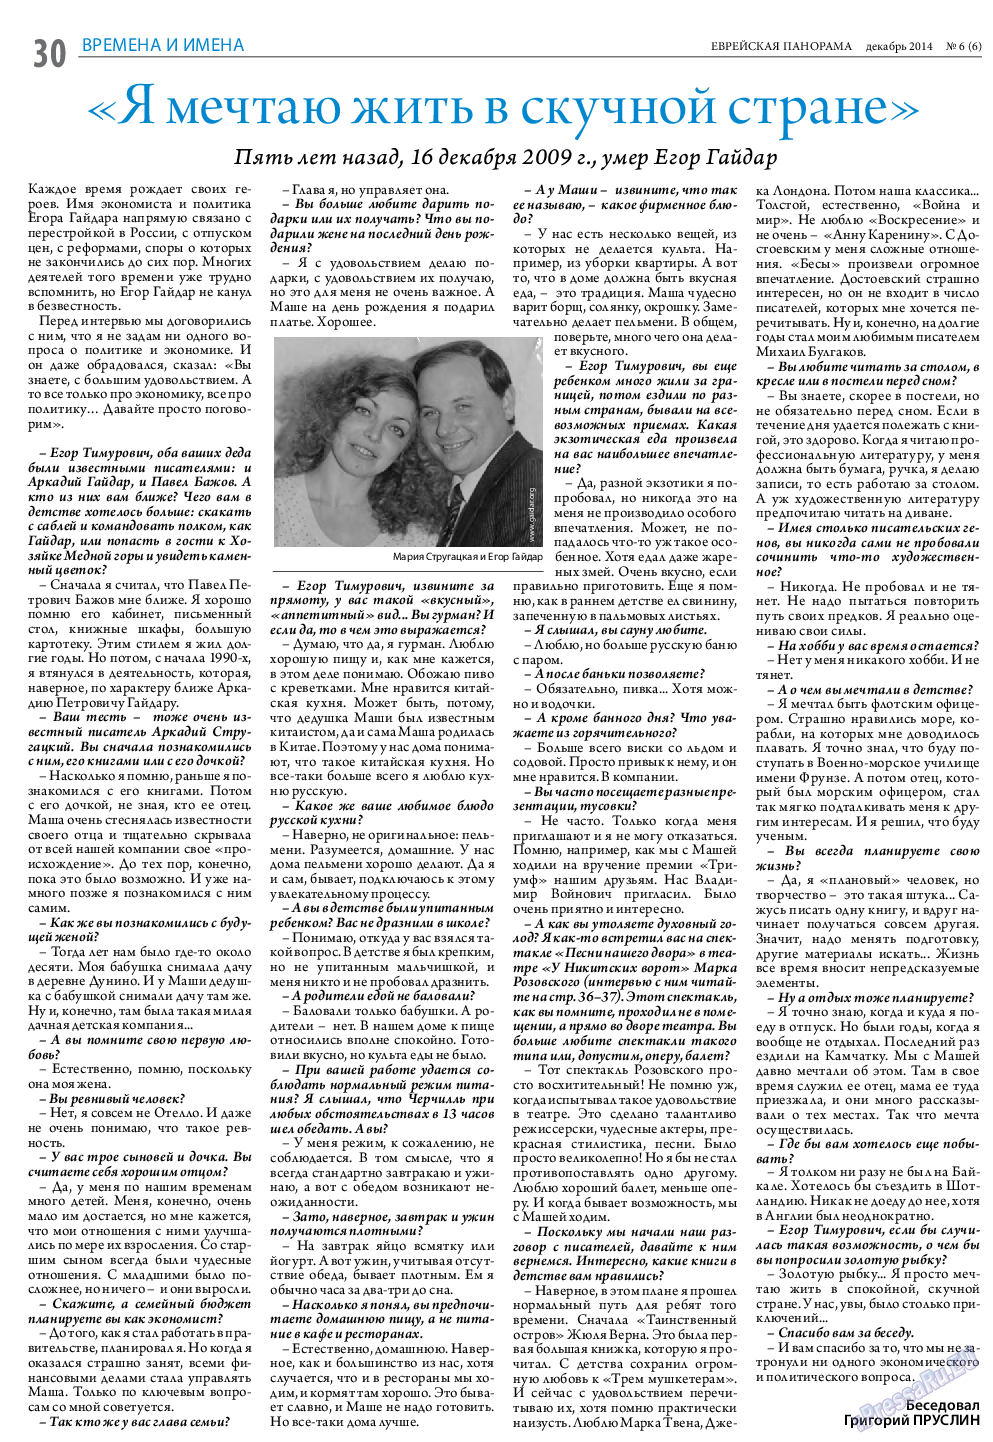 Еврейская панорама, газета. 2014 №6 стр.30